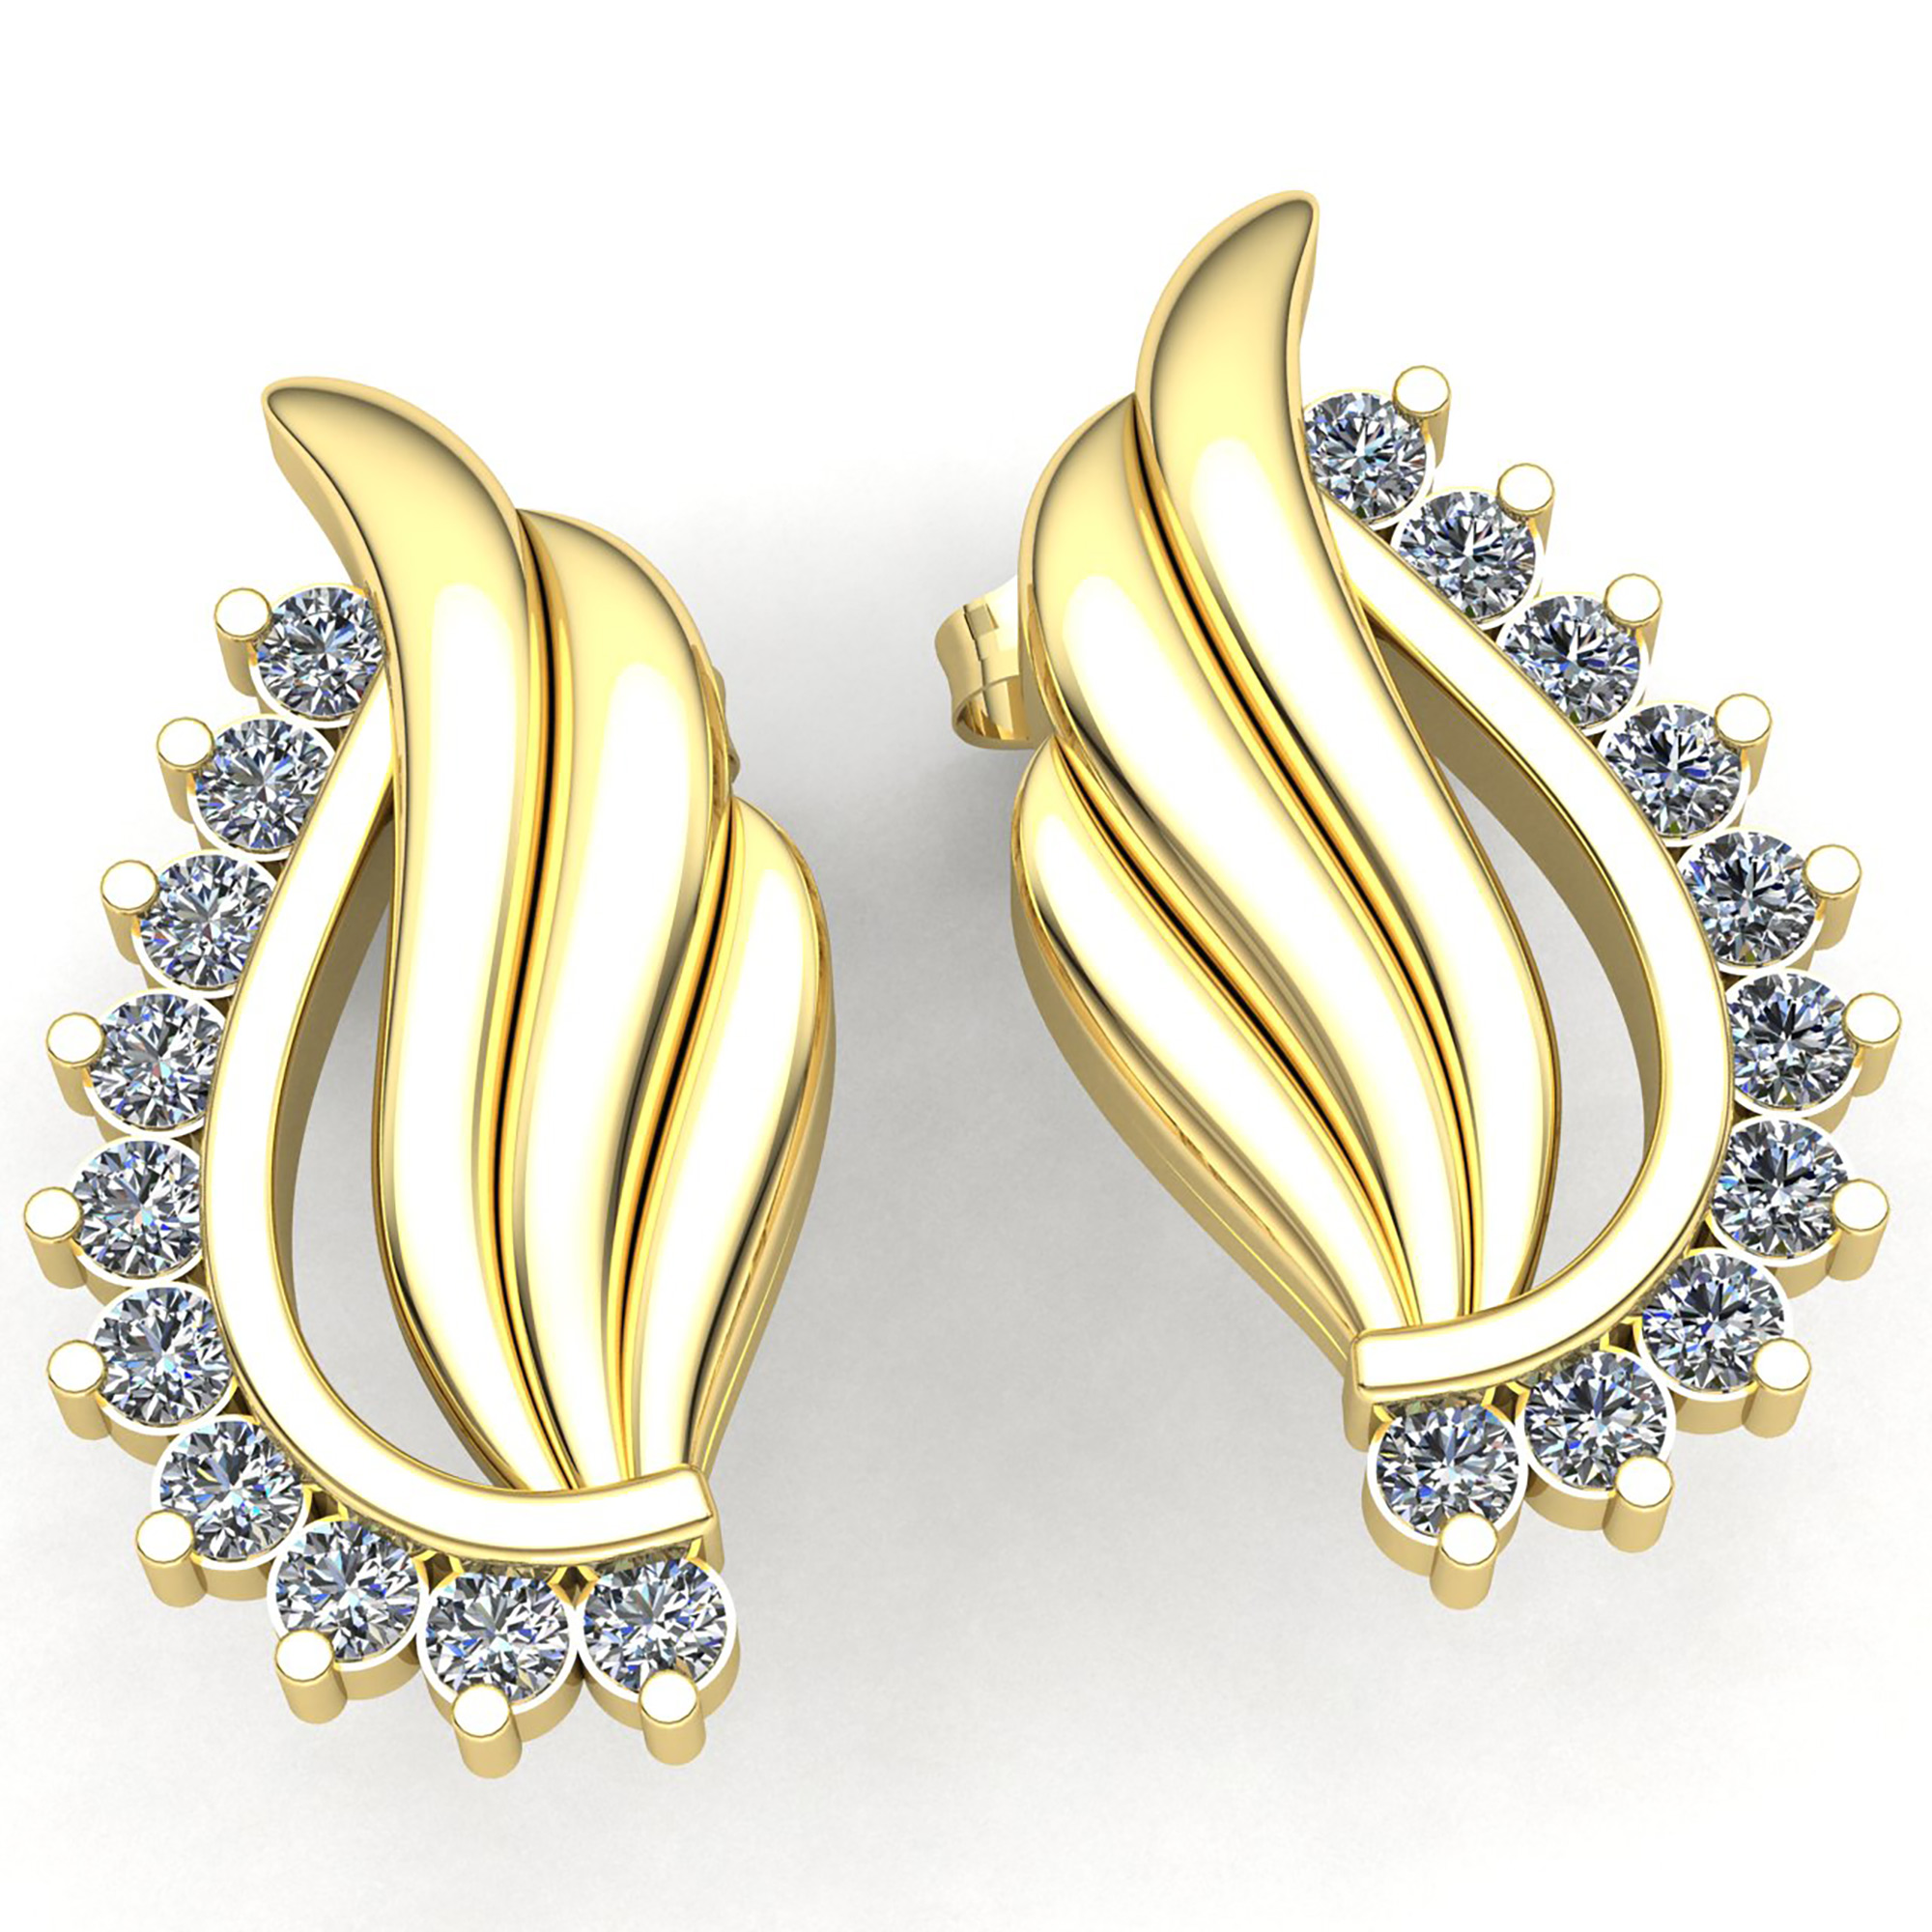 Jewel We Sell 2carat Round Brilliant Cut Diamond Ladies Fancy Earrings 14K White, Yellow or Rose Gold FG VS